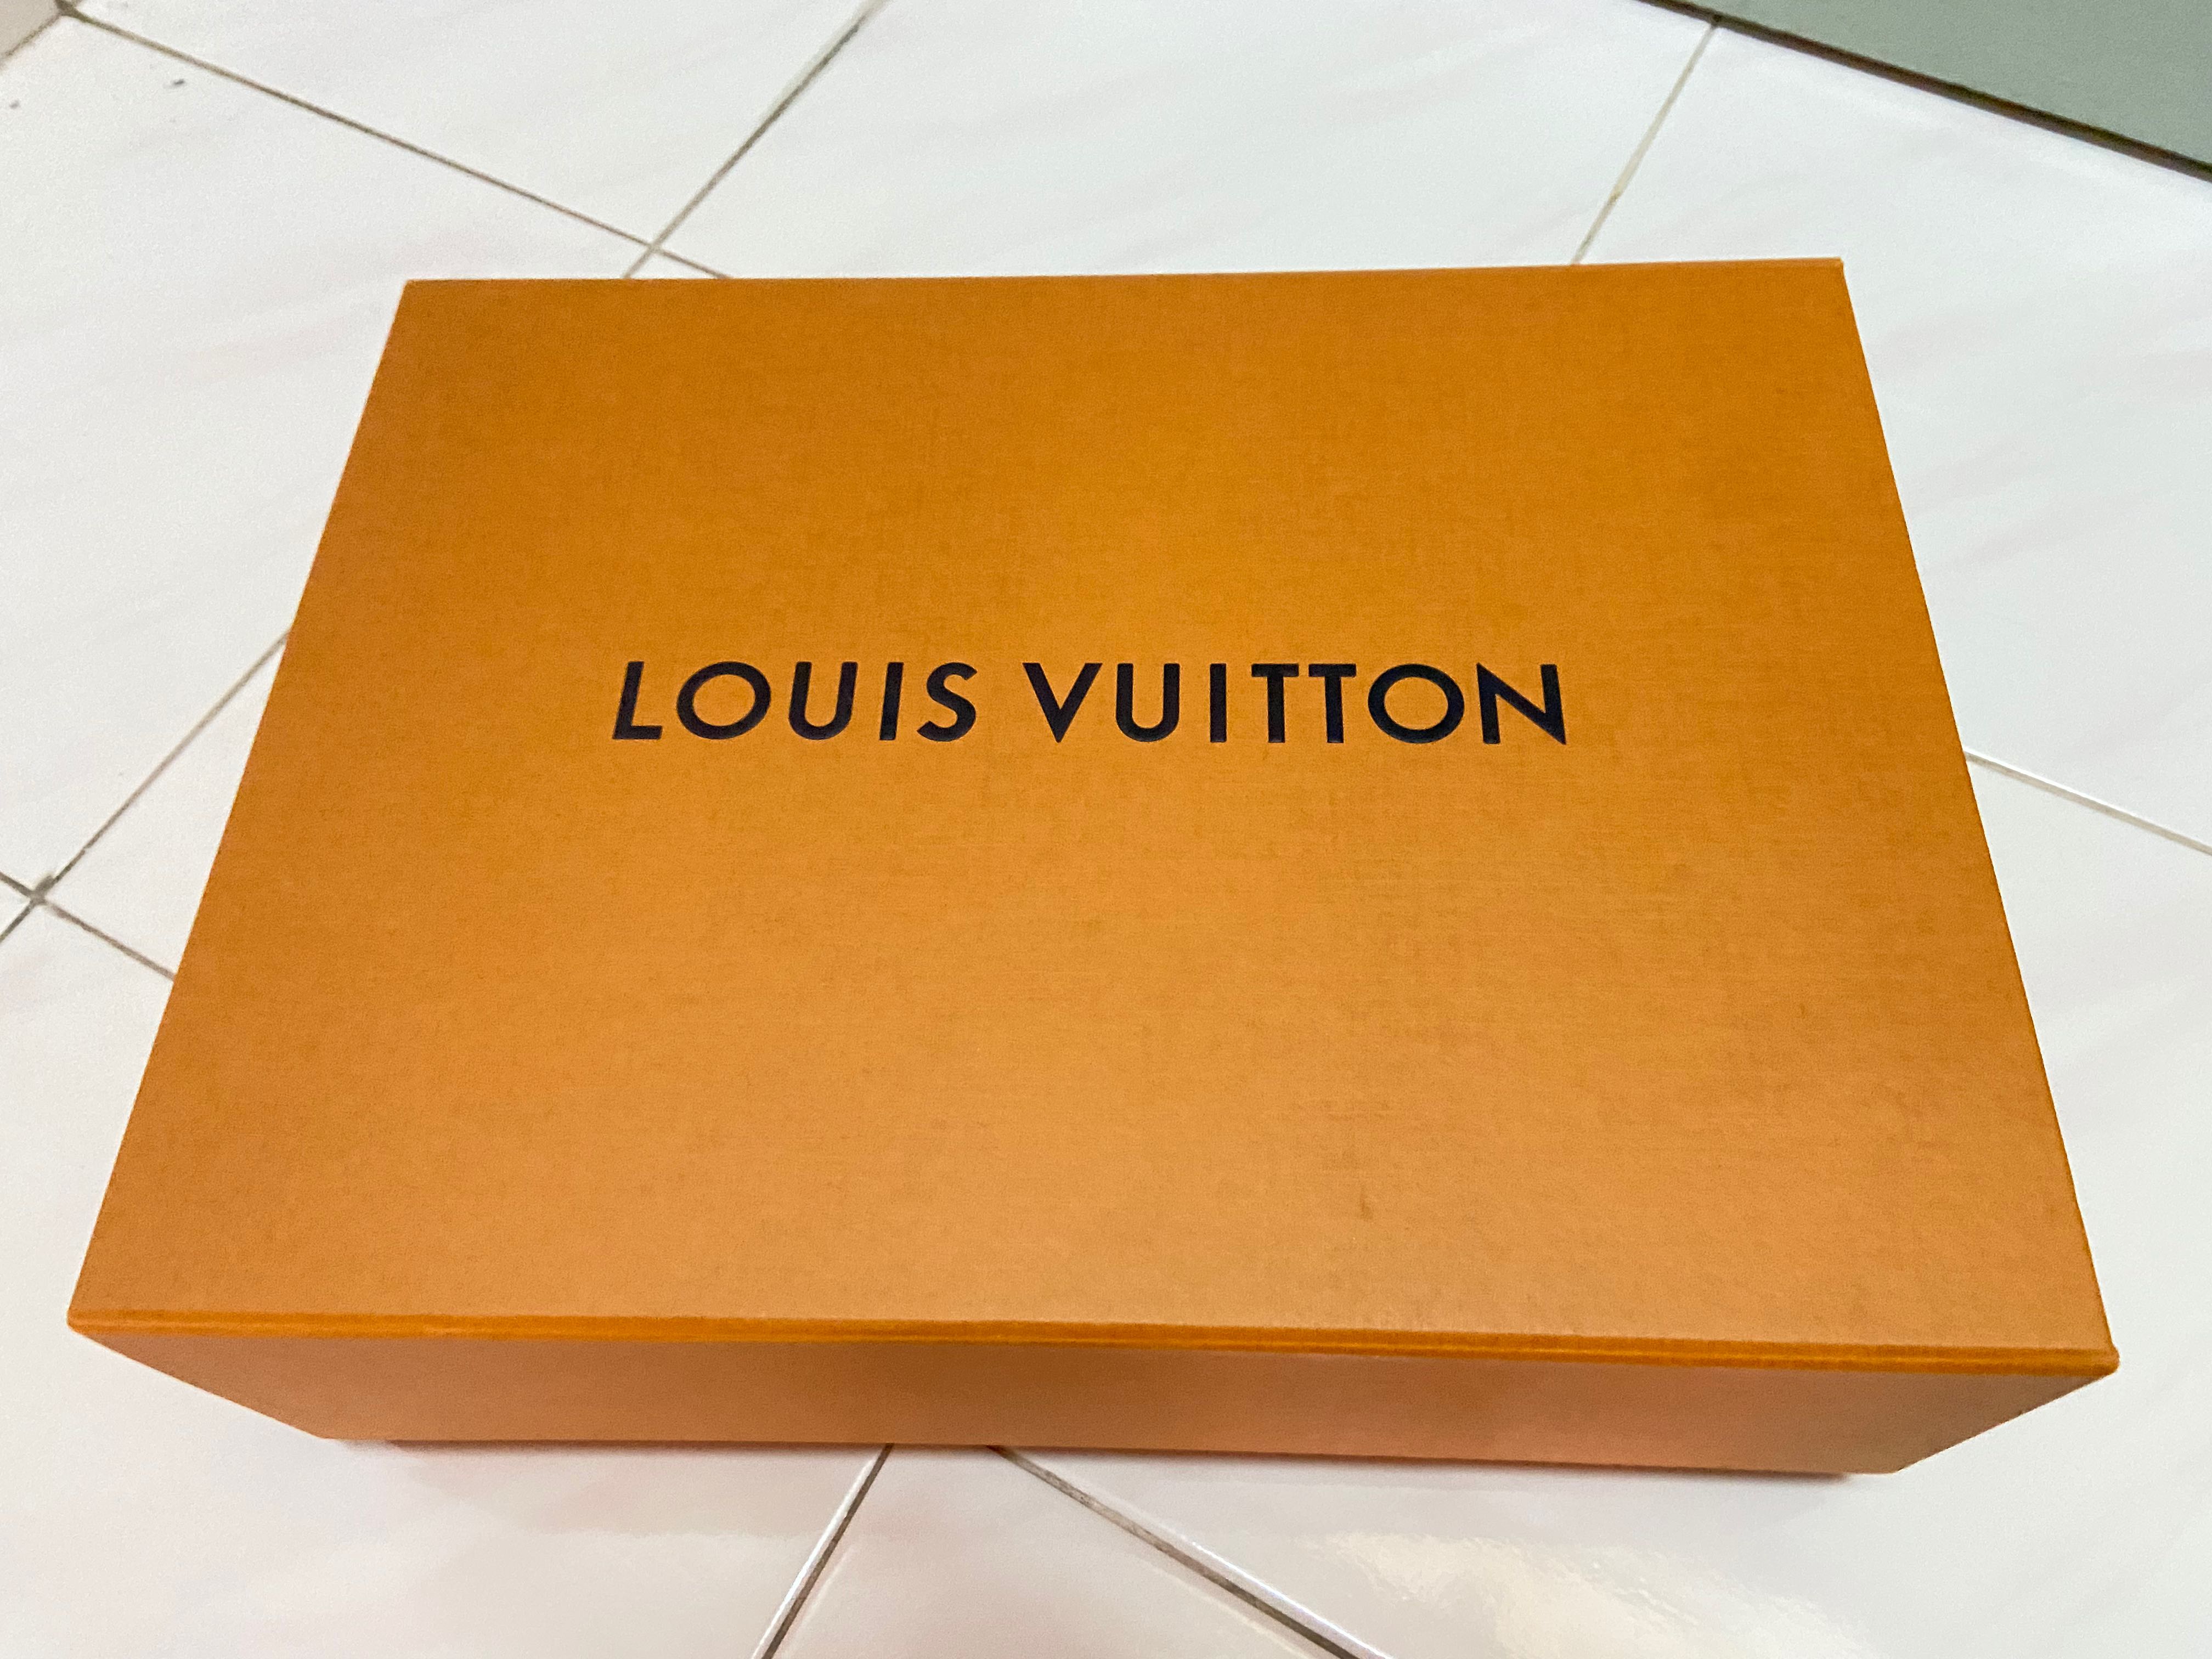 Authentic Louis Vuitton Box medium size, Luxury, Accessories on Carousell